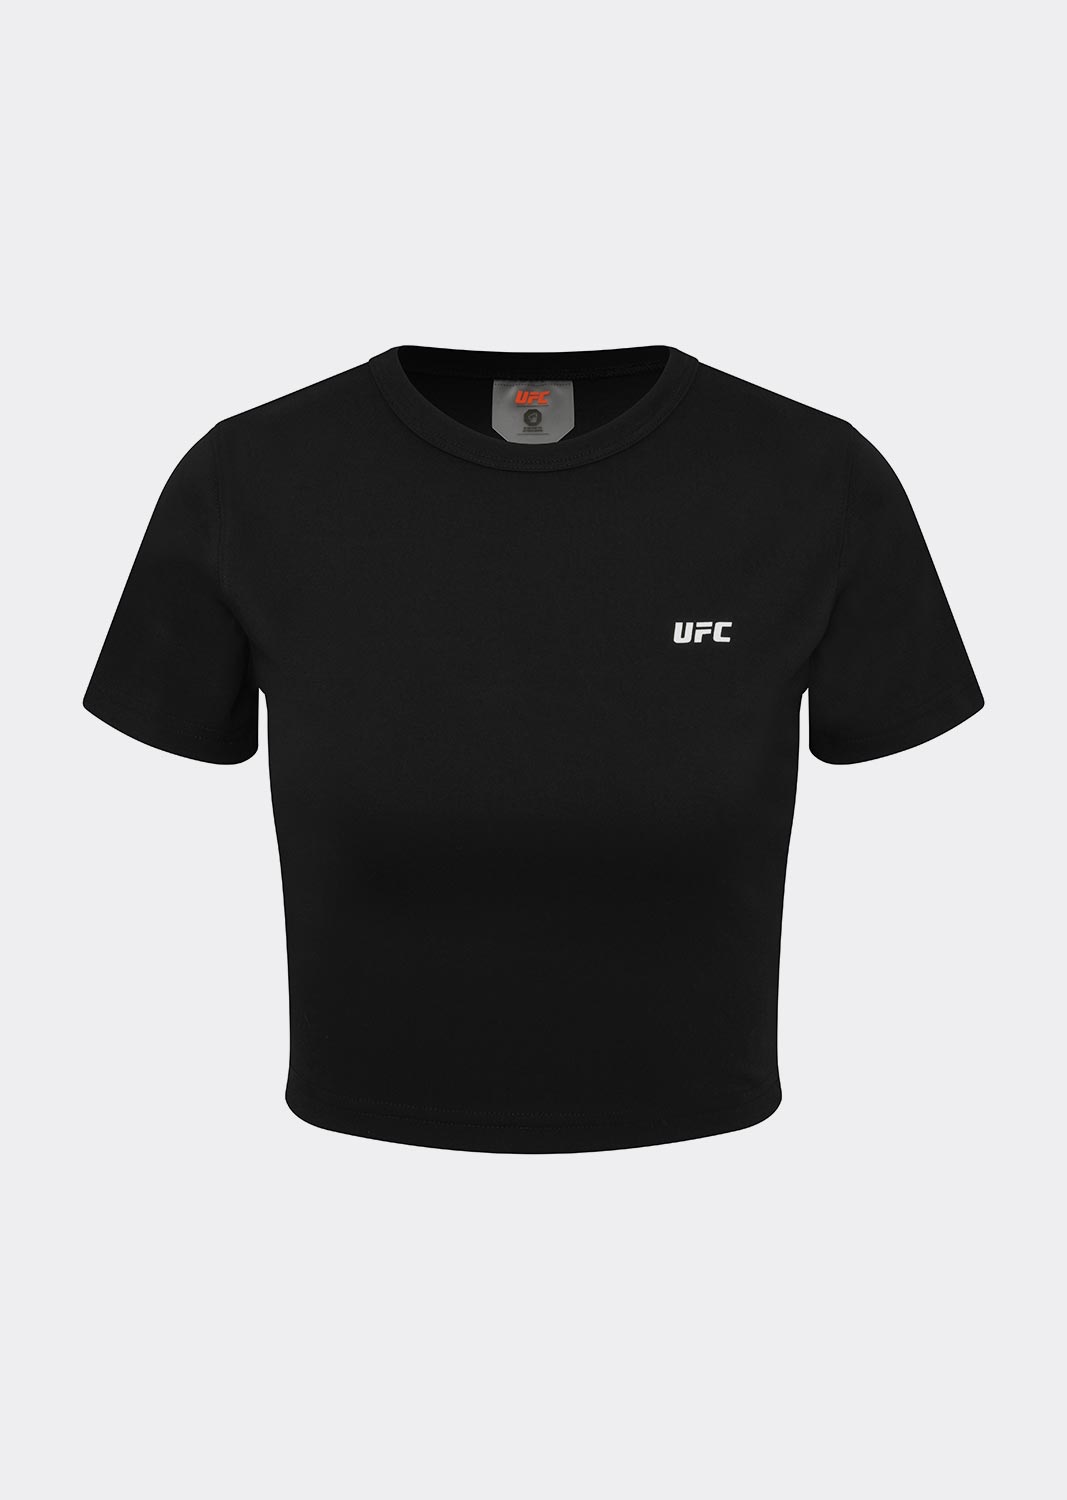 UFC 우먼스 피지컬 크롭핏 반팔 티셔츠 블랙 U2SSV2233BK